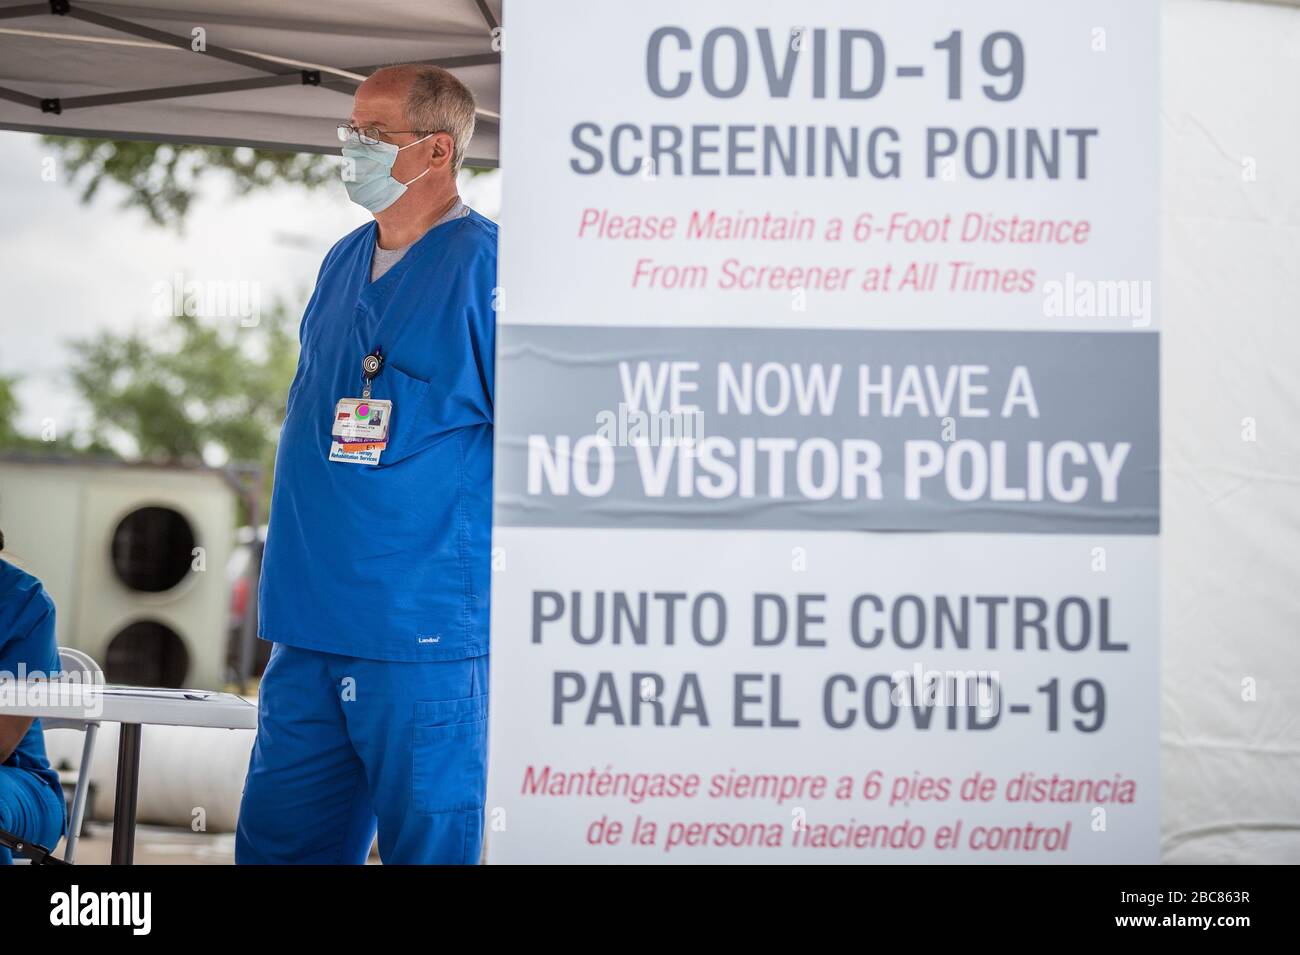 April 2, 2020: Health care workers prepare to treat patients amid the COVID-19 novel coronavirus pandemic. Prentice C. James/CSM Stock Photo